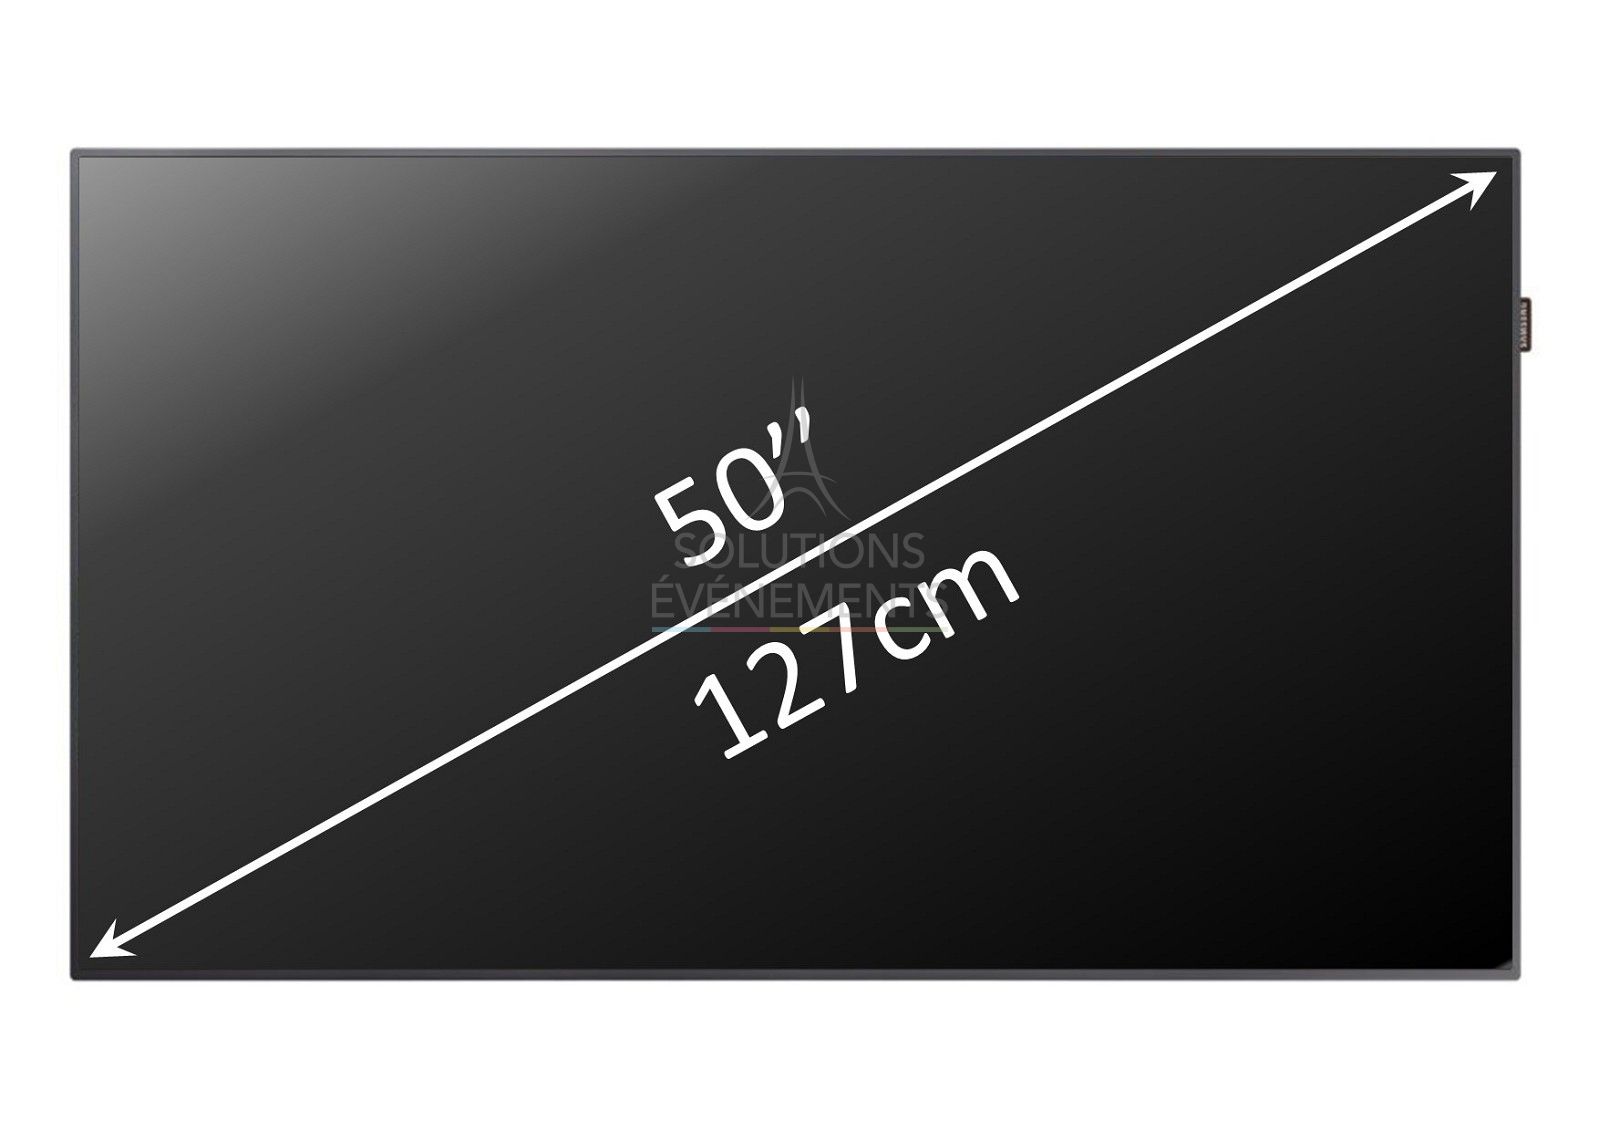 Location d'ecran plat 127cm Samsung QM50R-B. Moniteur professionnel